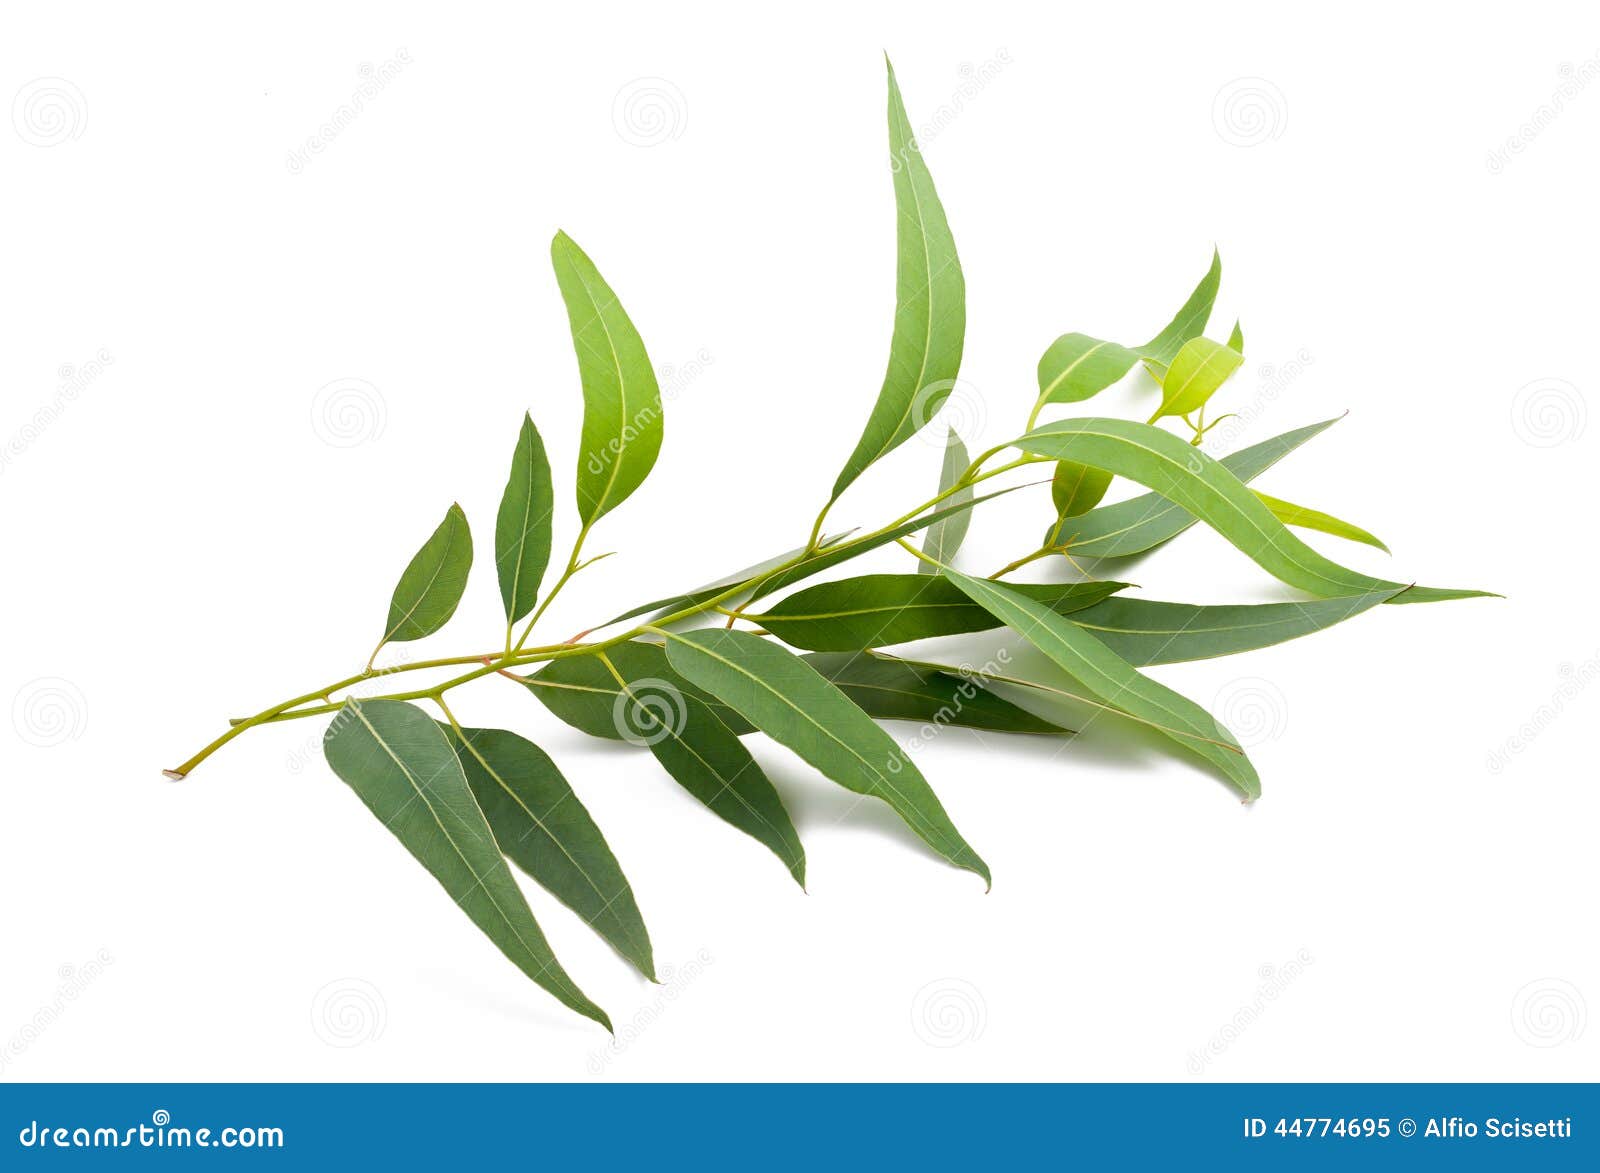 eucalyptus branch